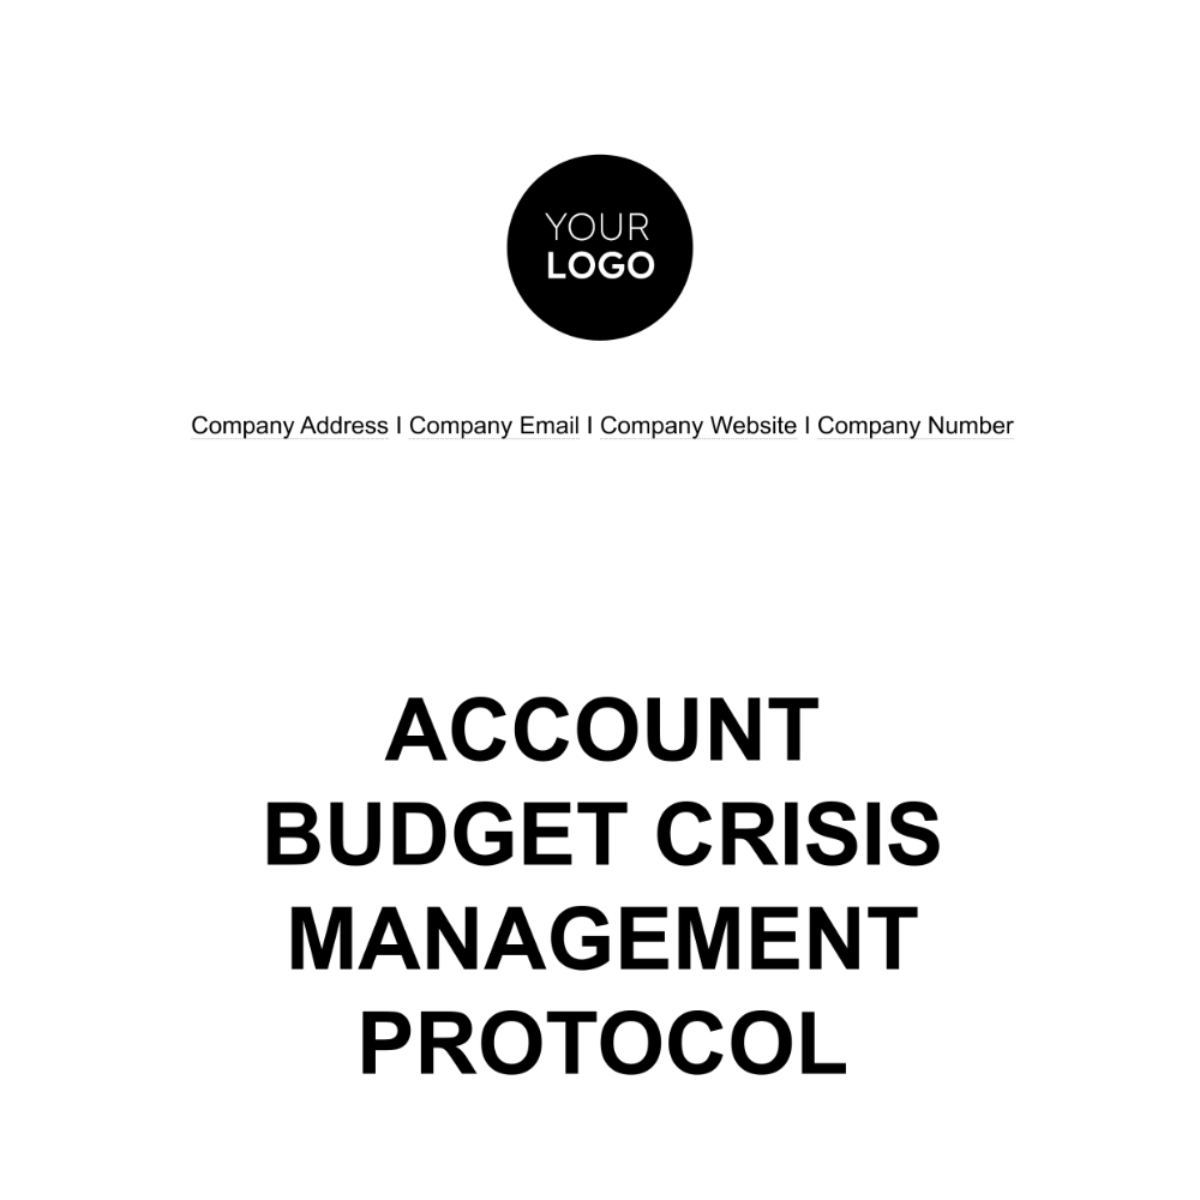 Account Budget Crisis Management Protocol Template